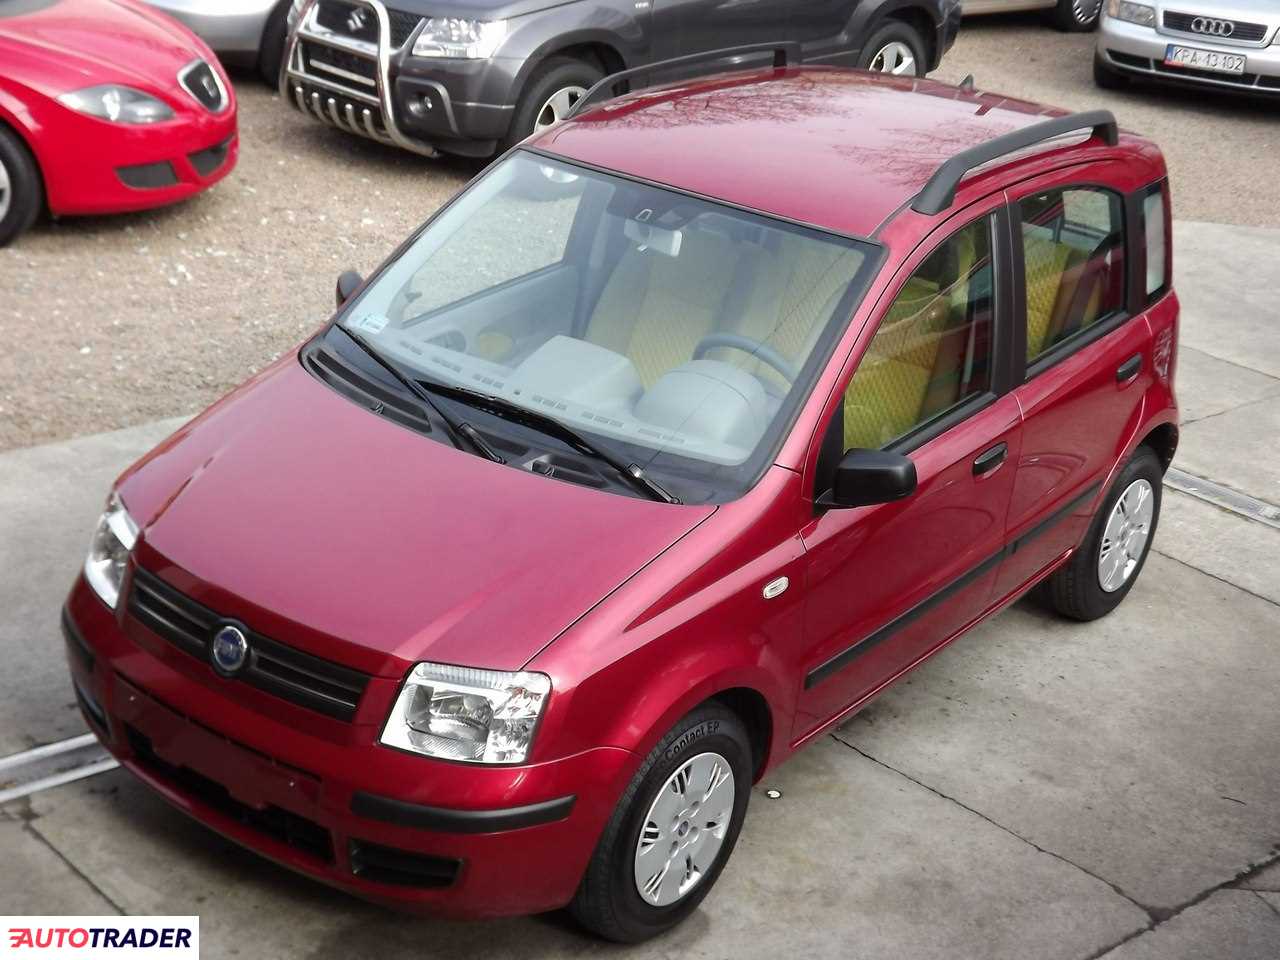 Fiat Panda 1.2 benzyna 60 KM 2007r. (Skawina) Autotrader.pl